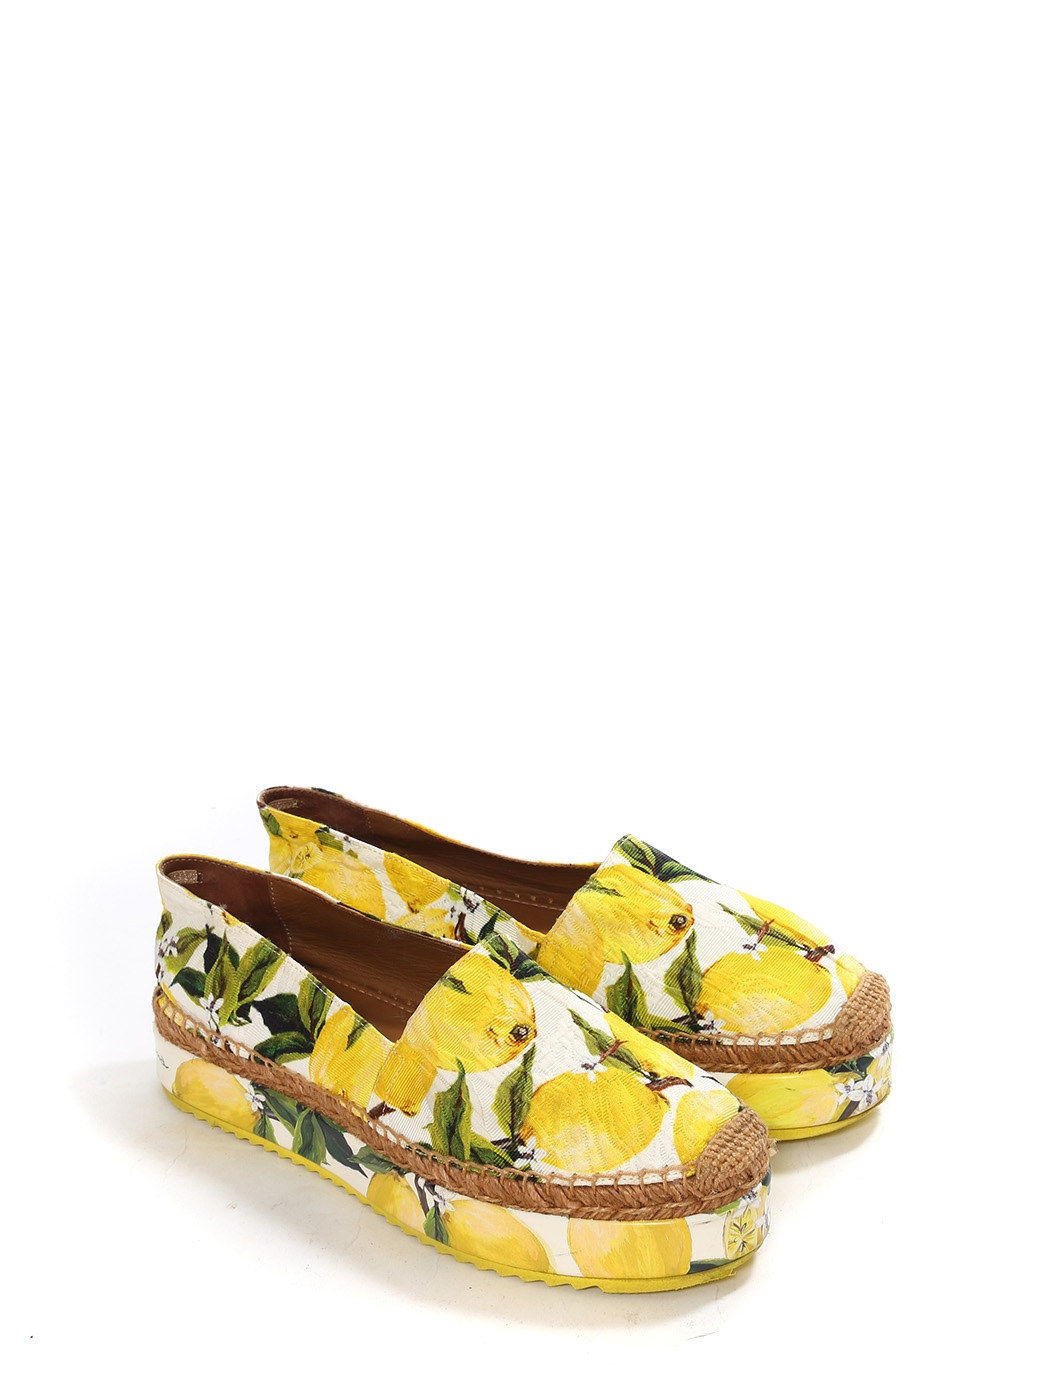 Boutique DOLCE & GABBANA Lemon yellow, green and white citrus print brocade  platform espadrilles Size 40